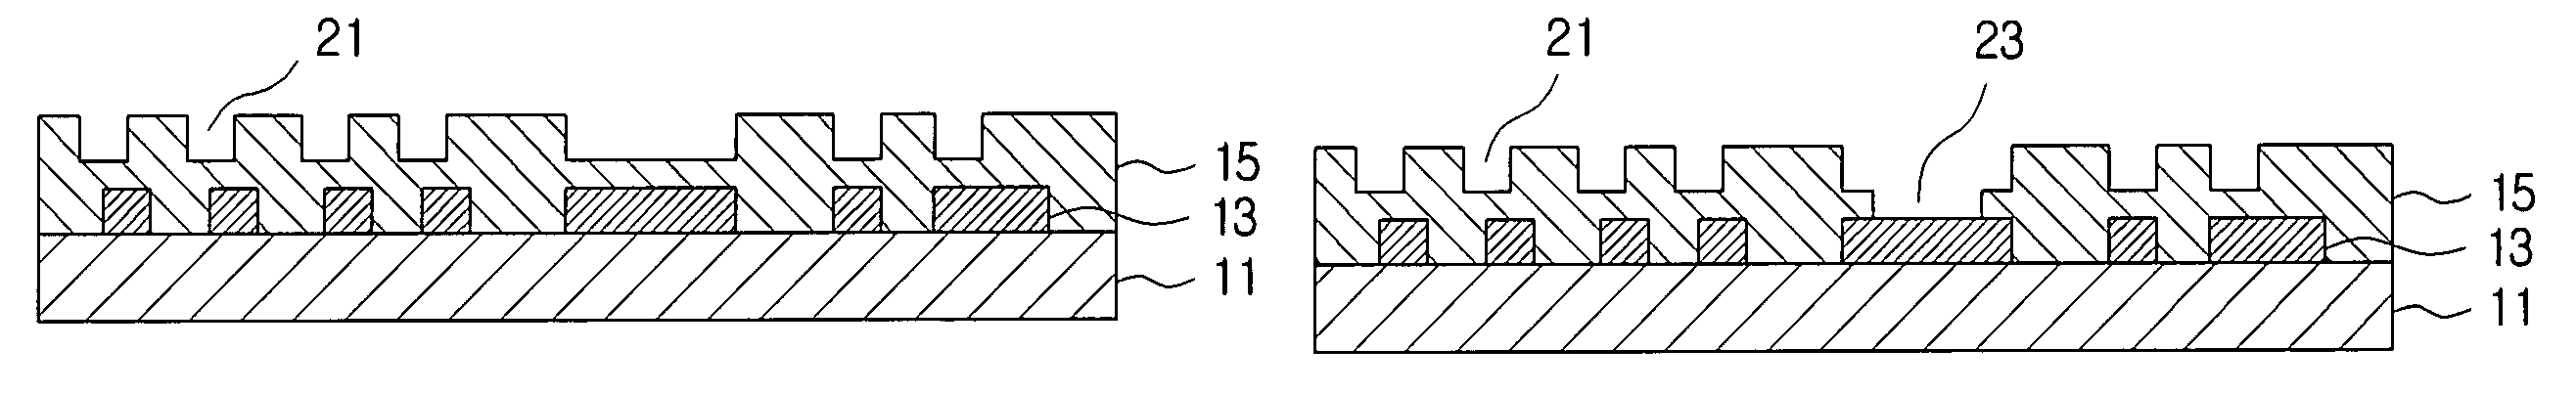 Fabricating method for printed circuit board